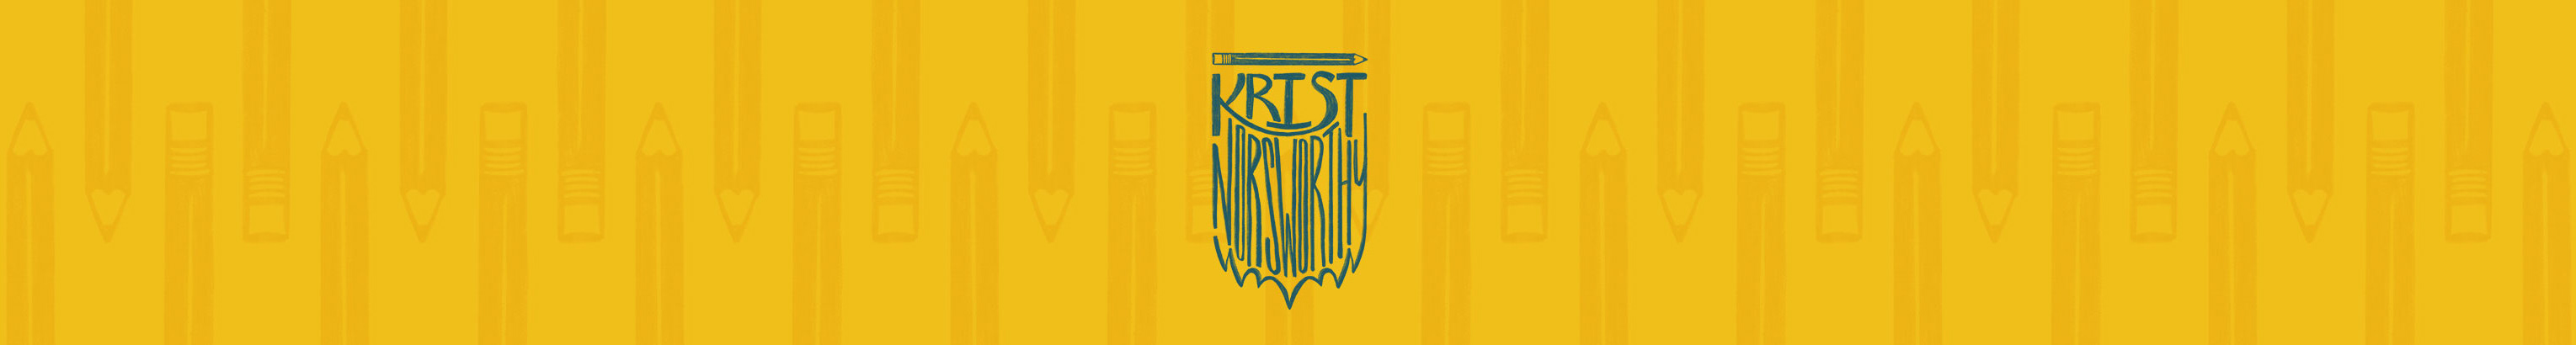 Krist Norsworthy's profile banner